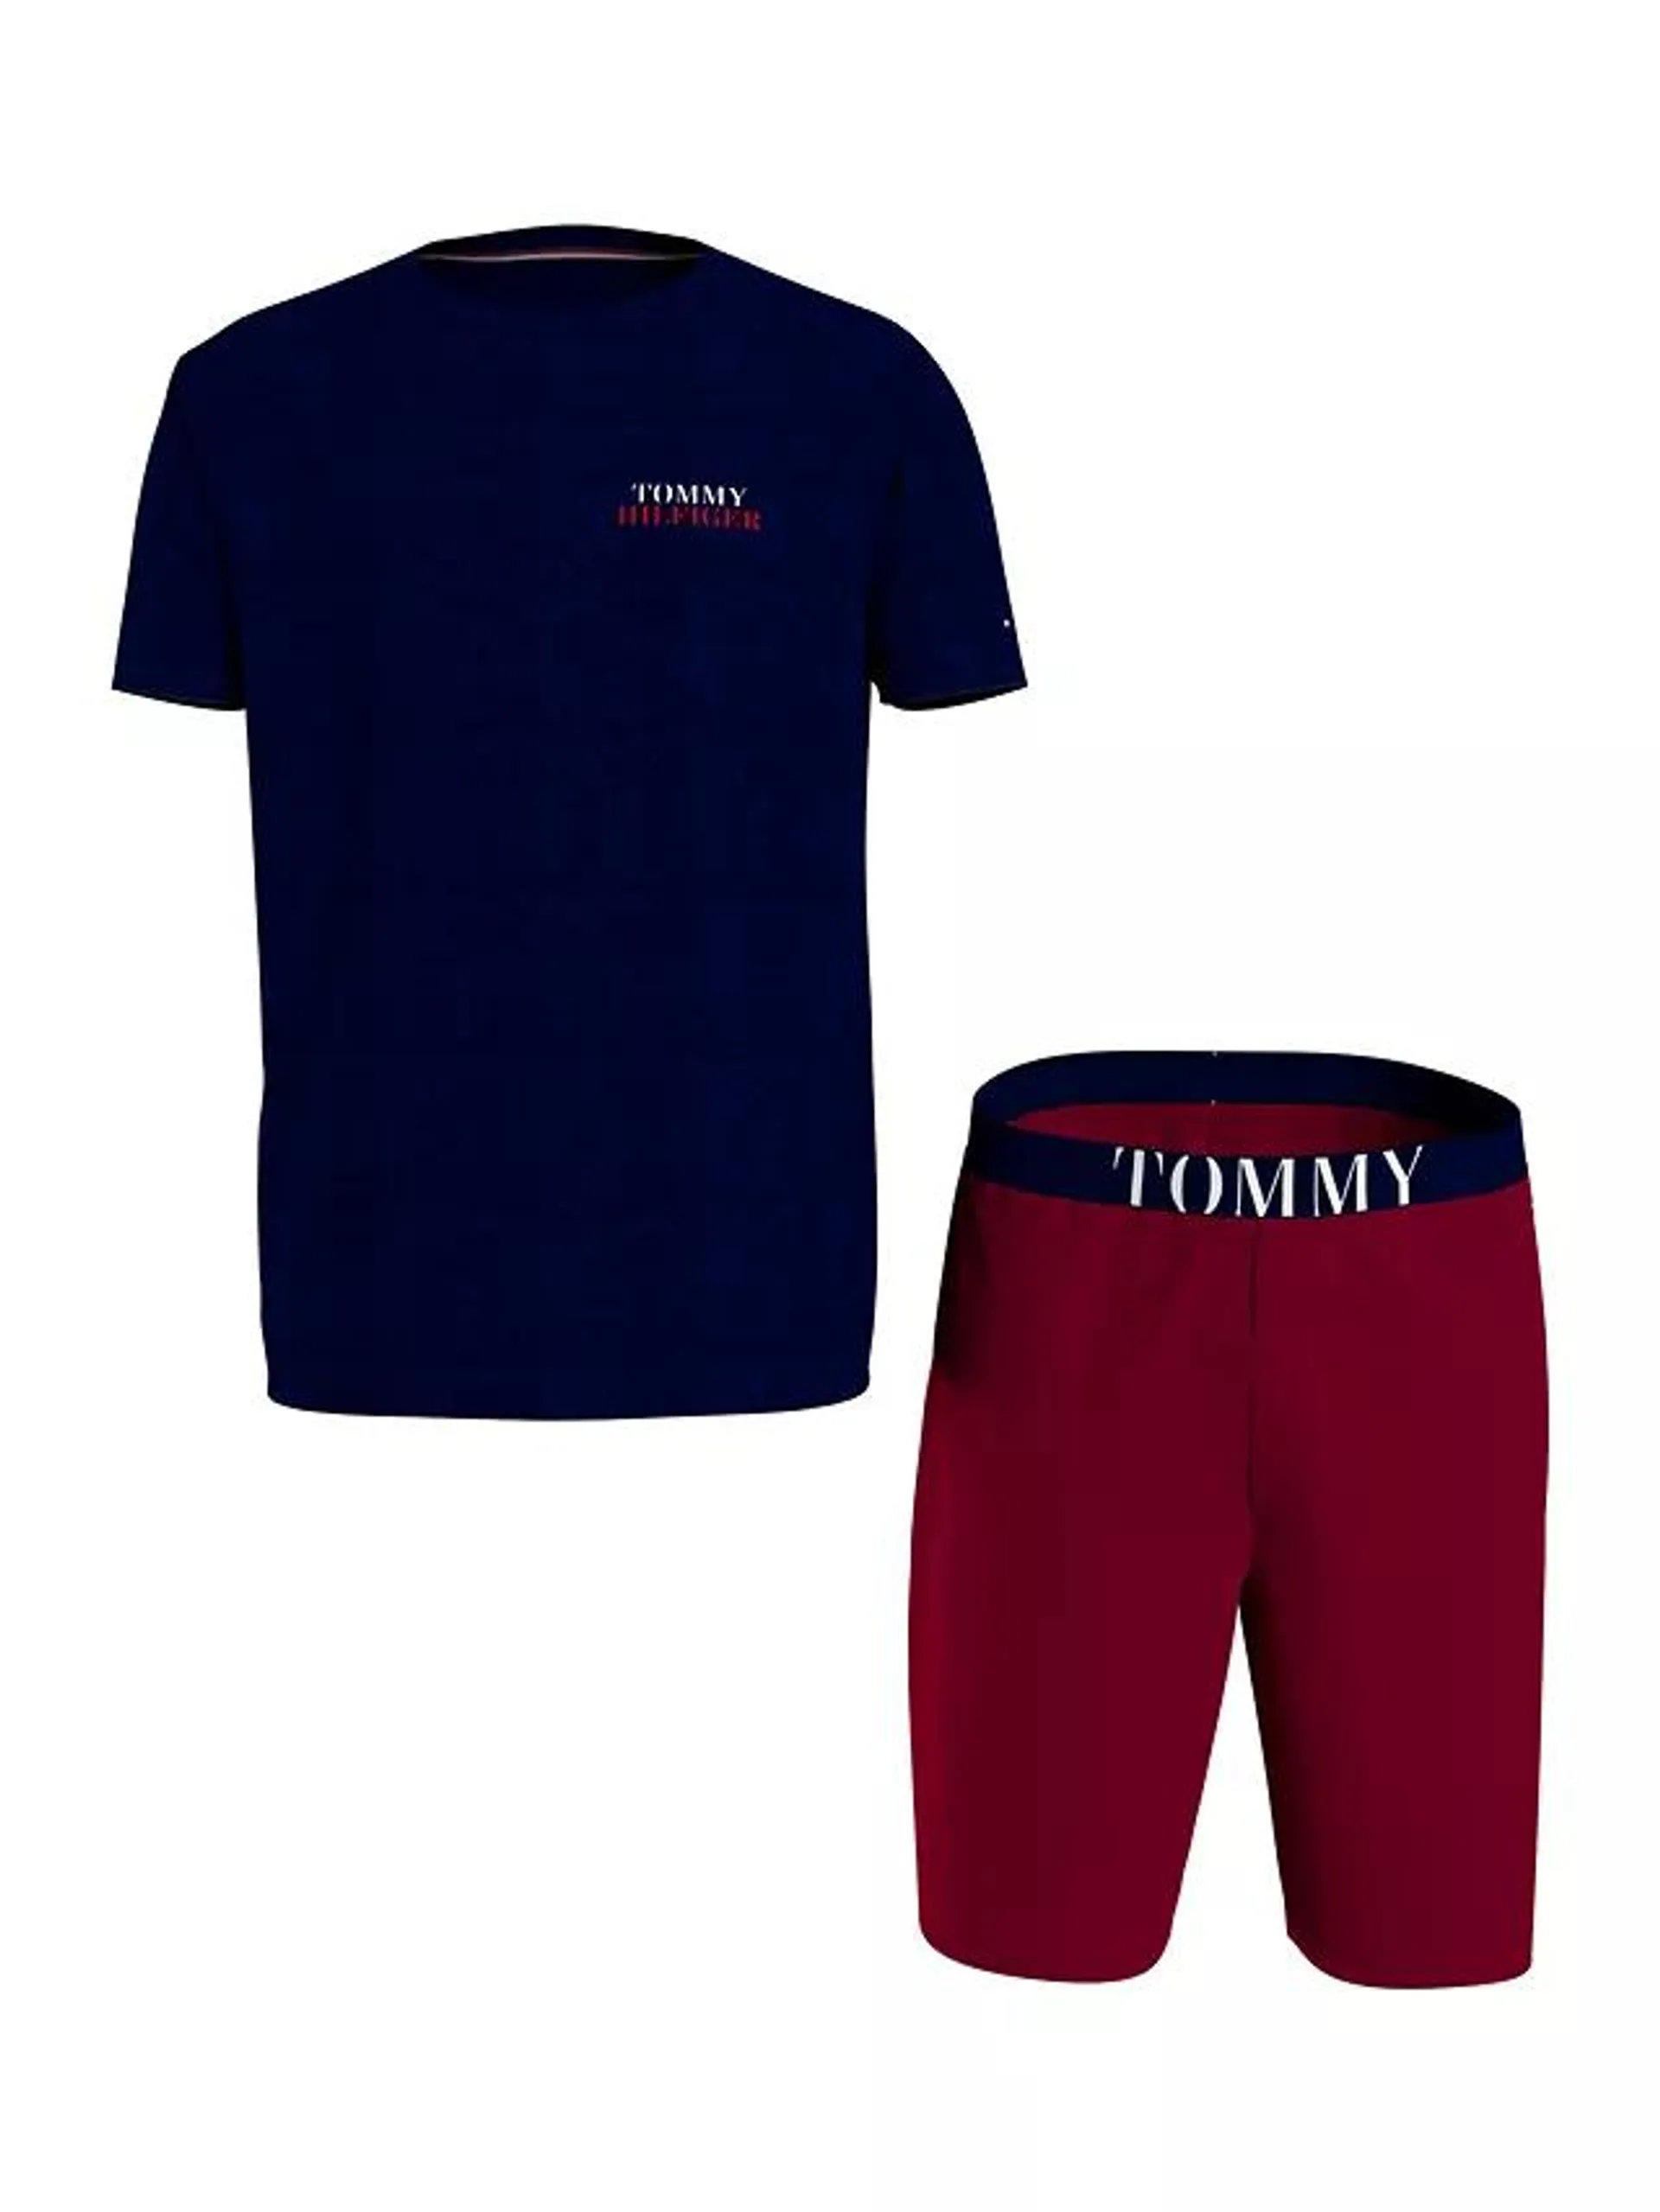 Tommy Hilfiger T-Shirt and Shorts Lounge Set, Desert Sky/Deep Rouge